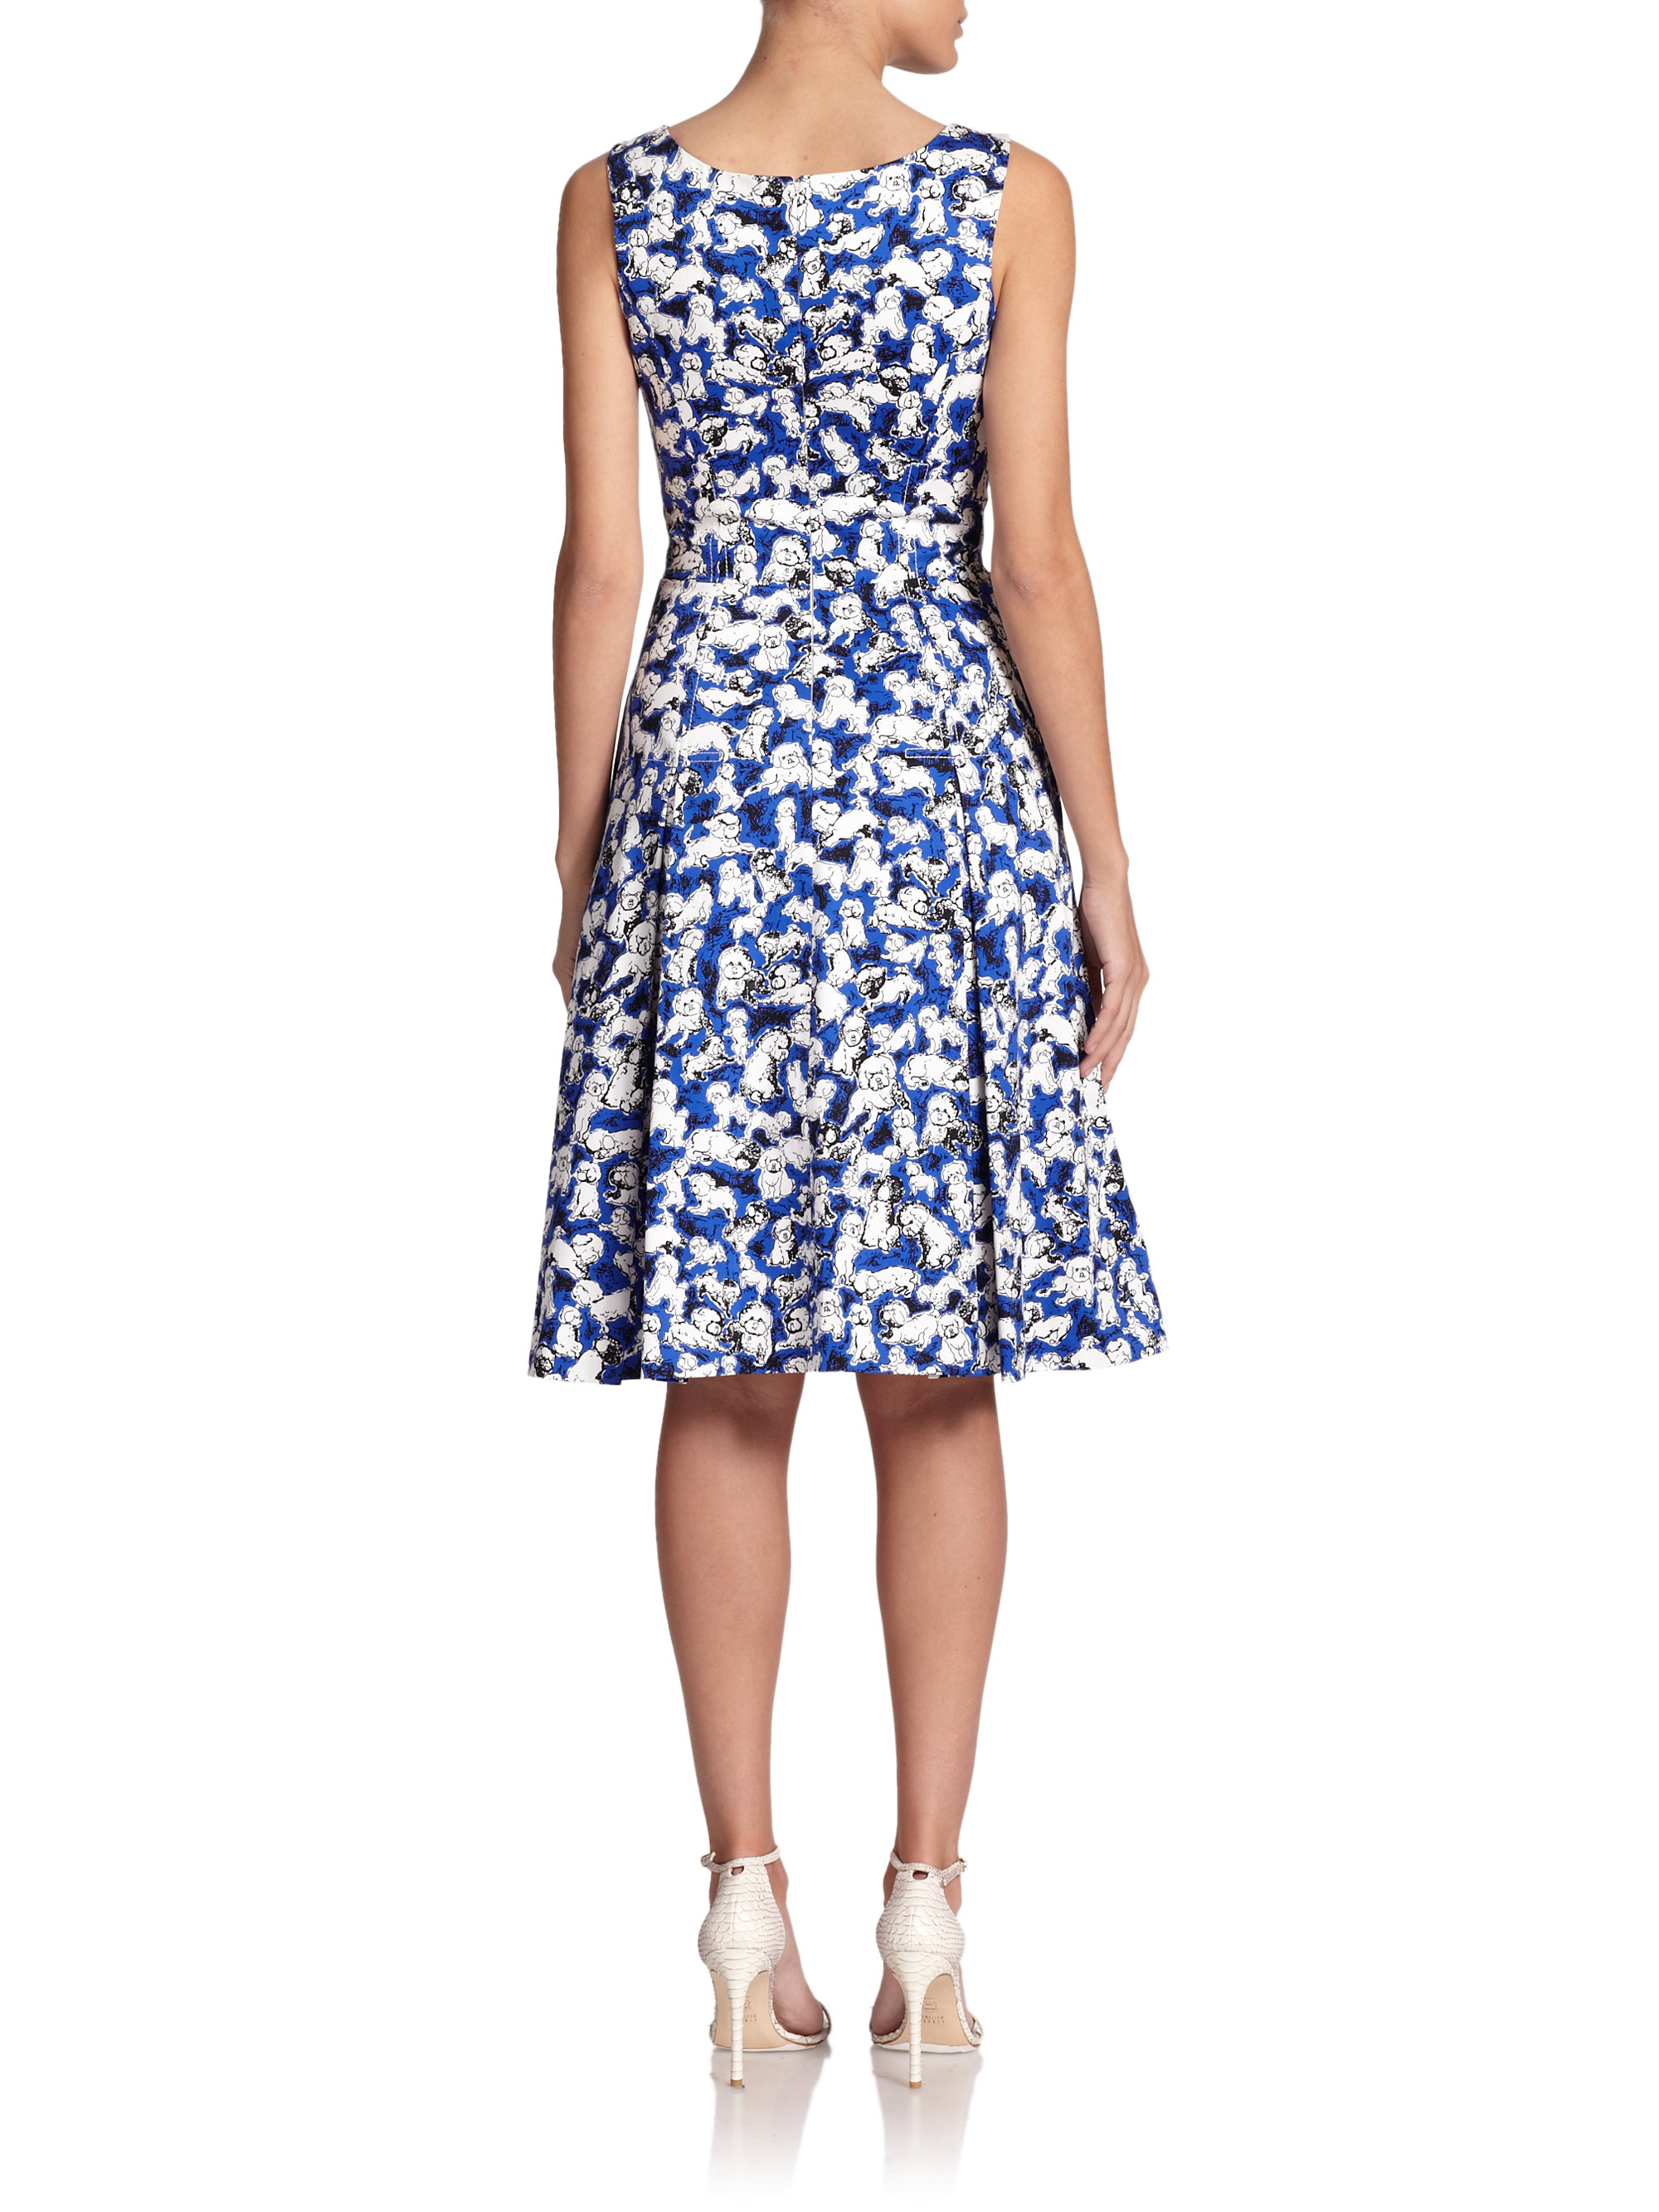 Lyst - Carolina Herrera Gaspar-print A-line Dress in Blue